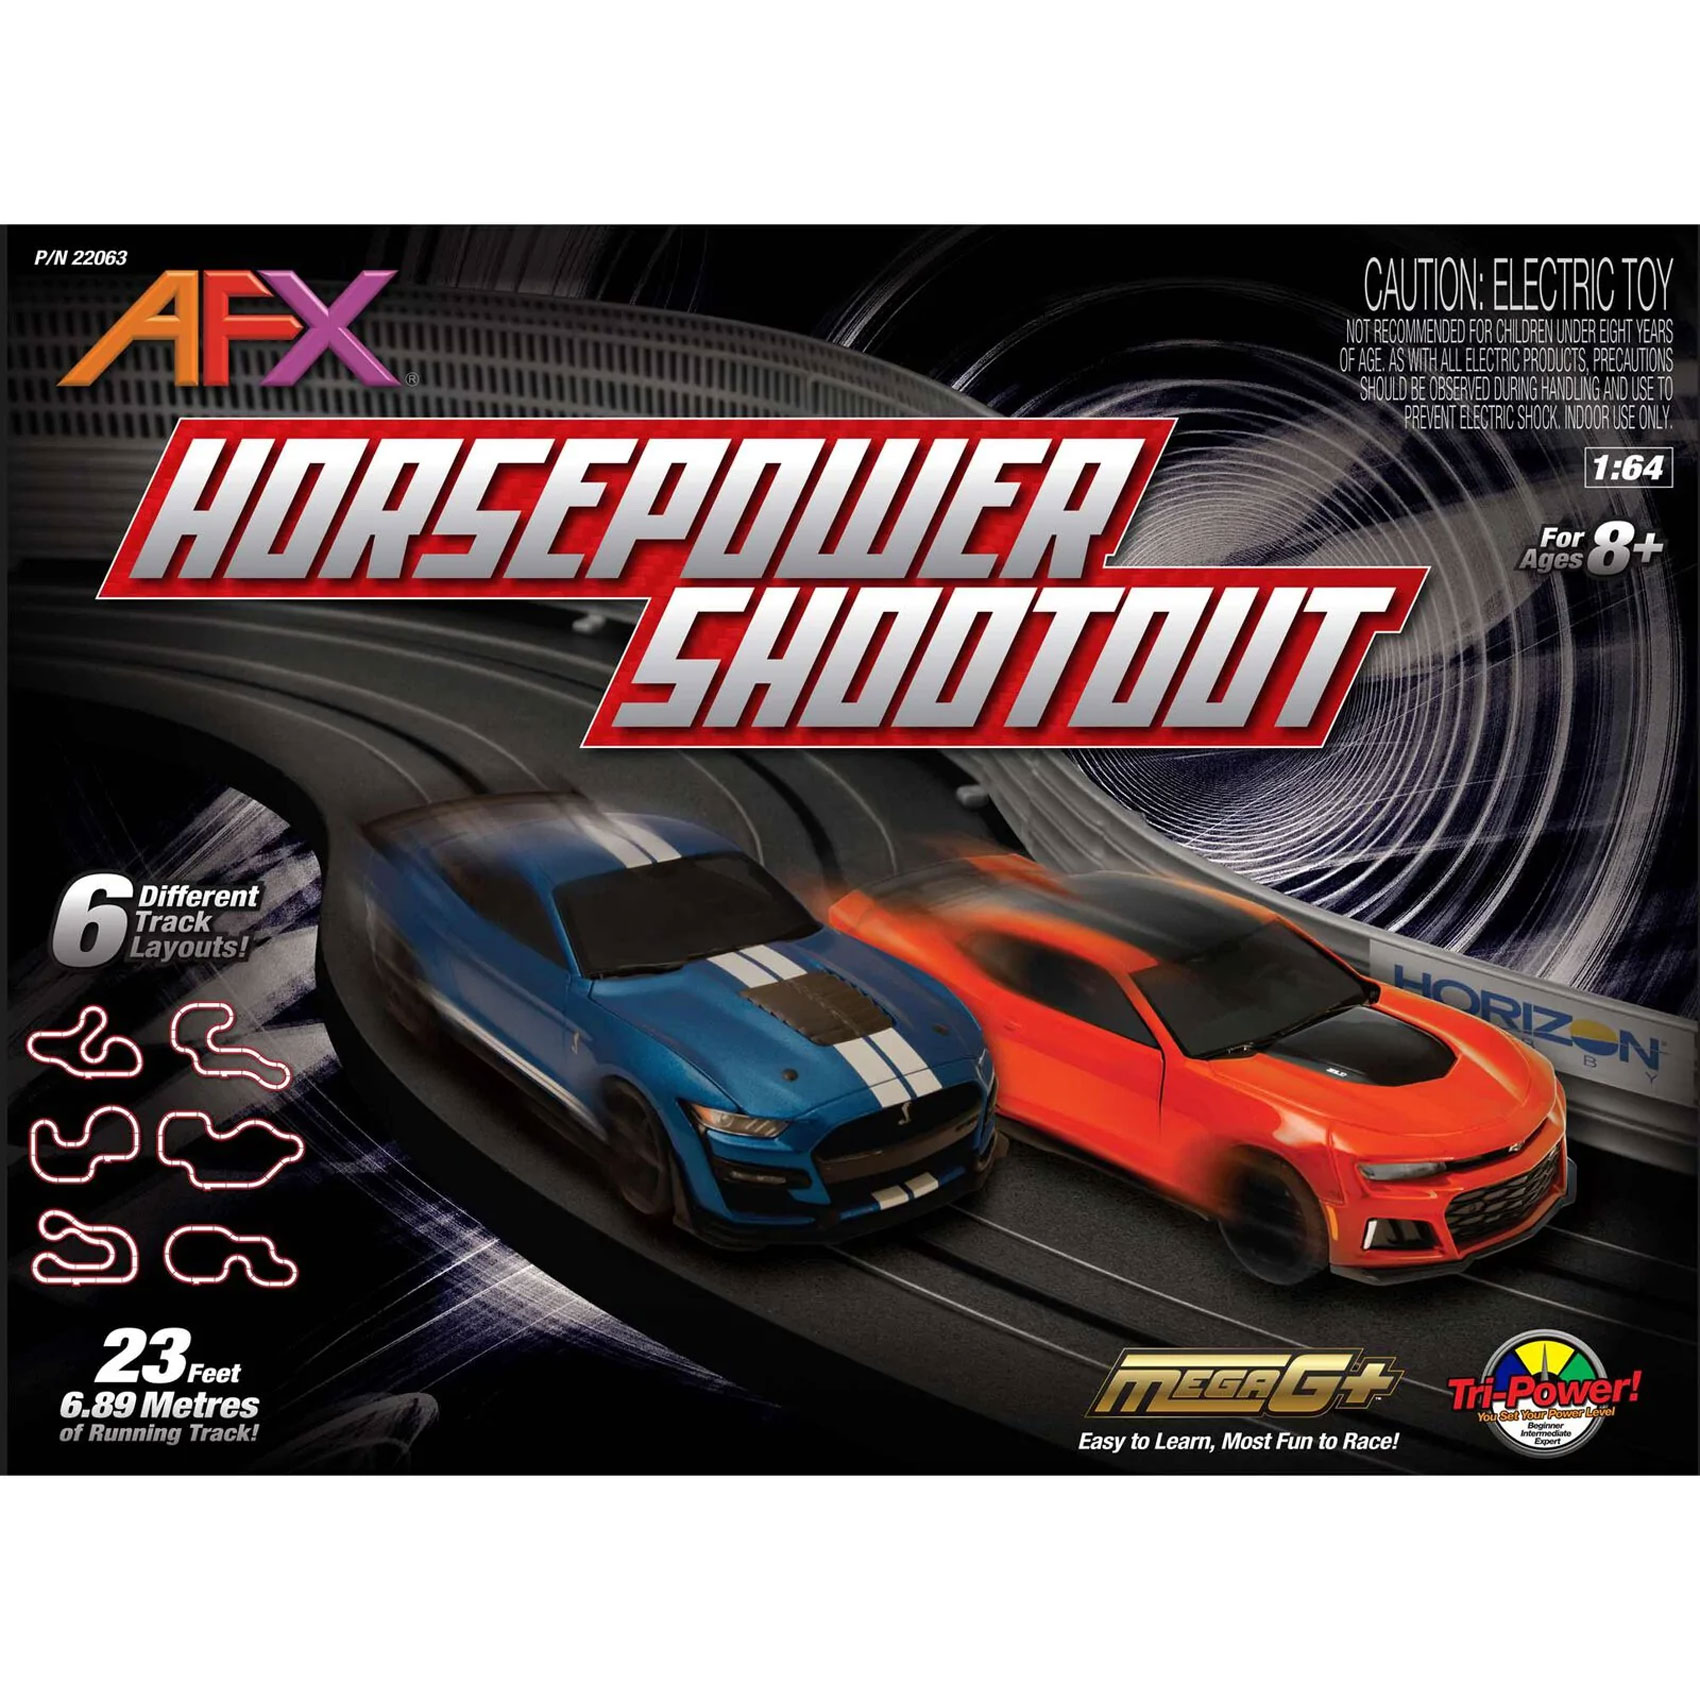 AFX Horsepower Shootout 23' Slot Car Set